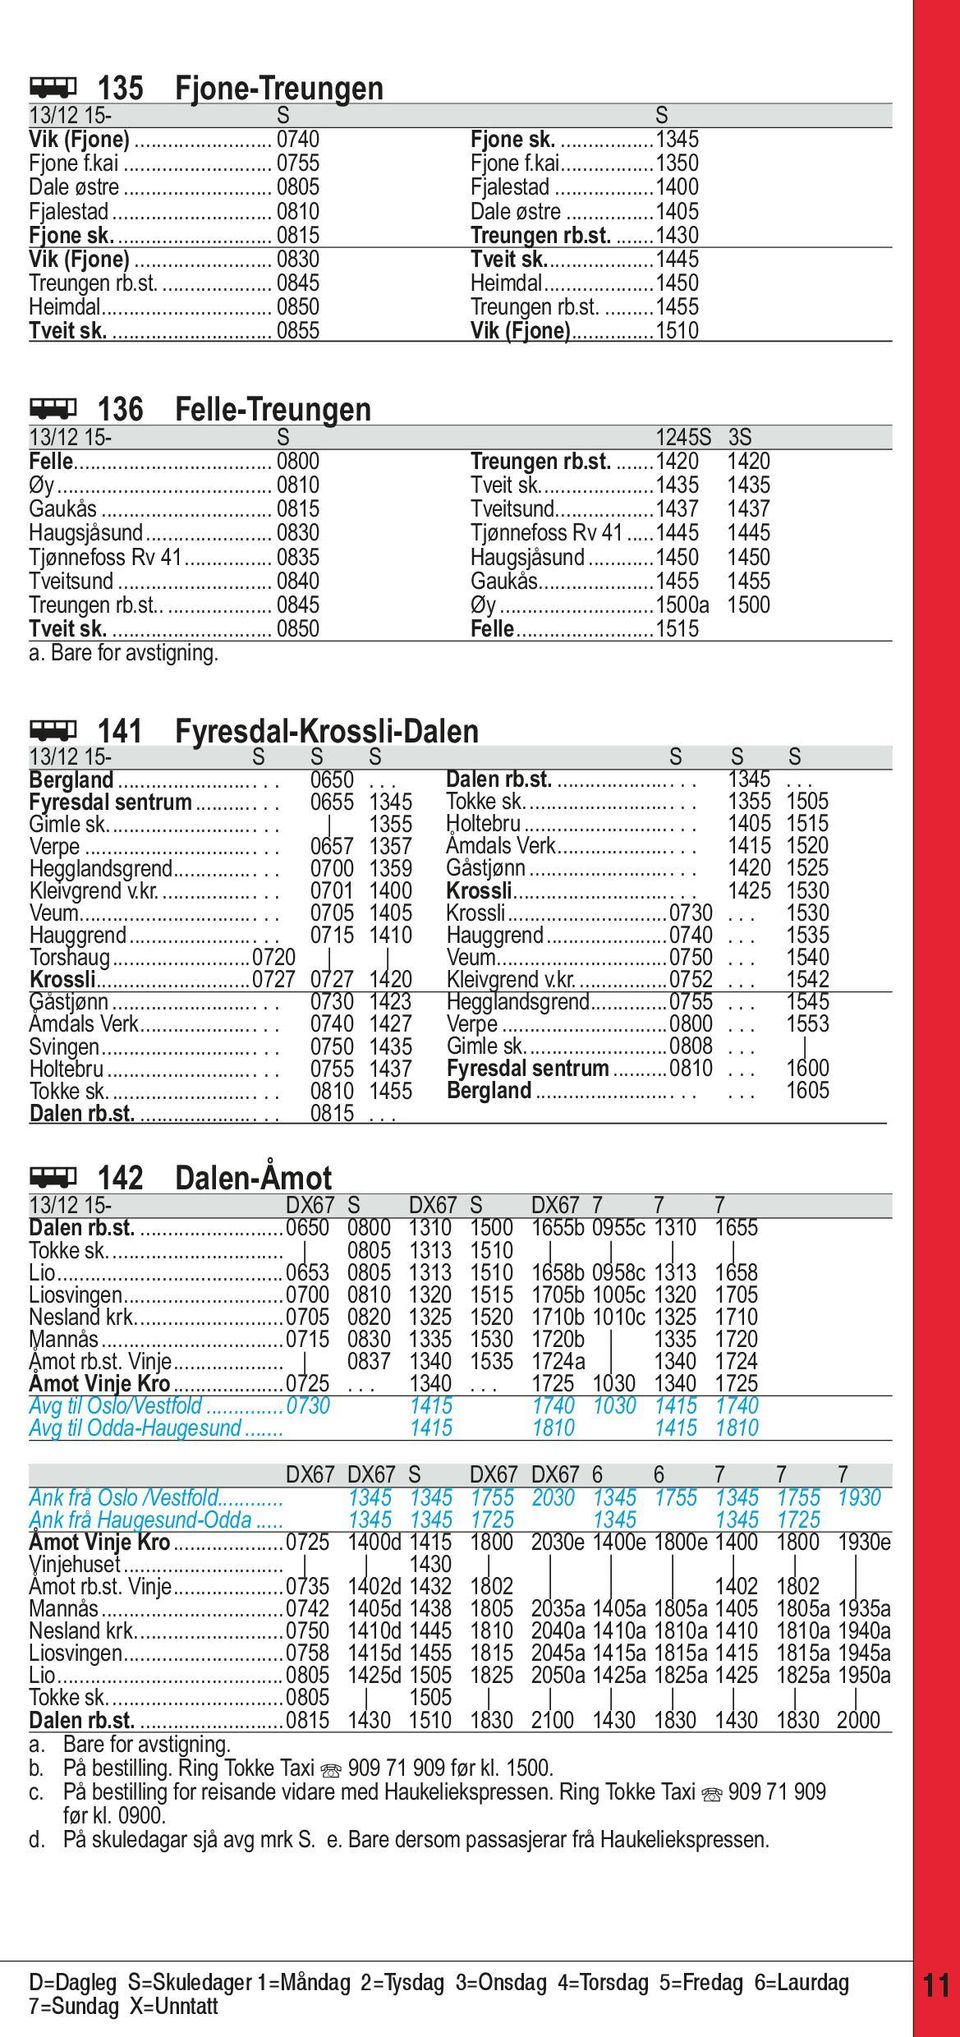 .. 0800 Treungen rb.st...1420 1420 Øy... 0810 Tveit sk...1435 1435 Gaukås... 0815 Tveitsund...1437 1437 Haugsjåsund... 0830 Tjønnefoss Rv 41...1445 1445 Tjønnefoss Rv 41... 0835 Haugsjåsund.